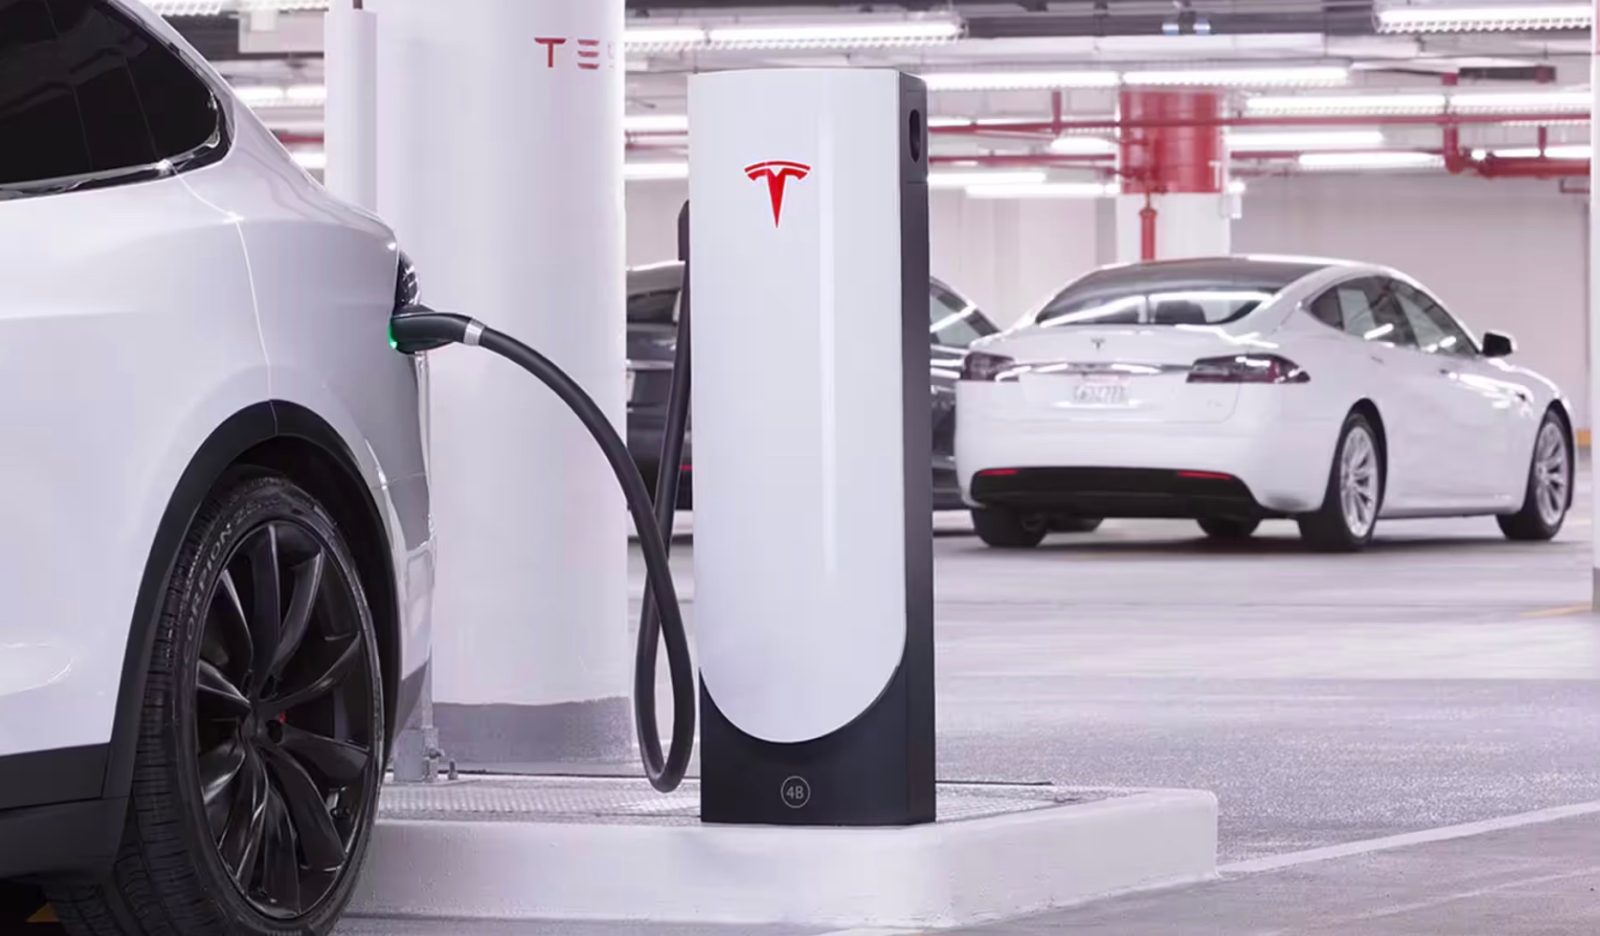 Tesla Urban Supercharger